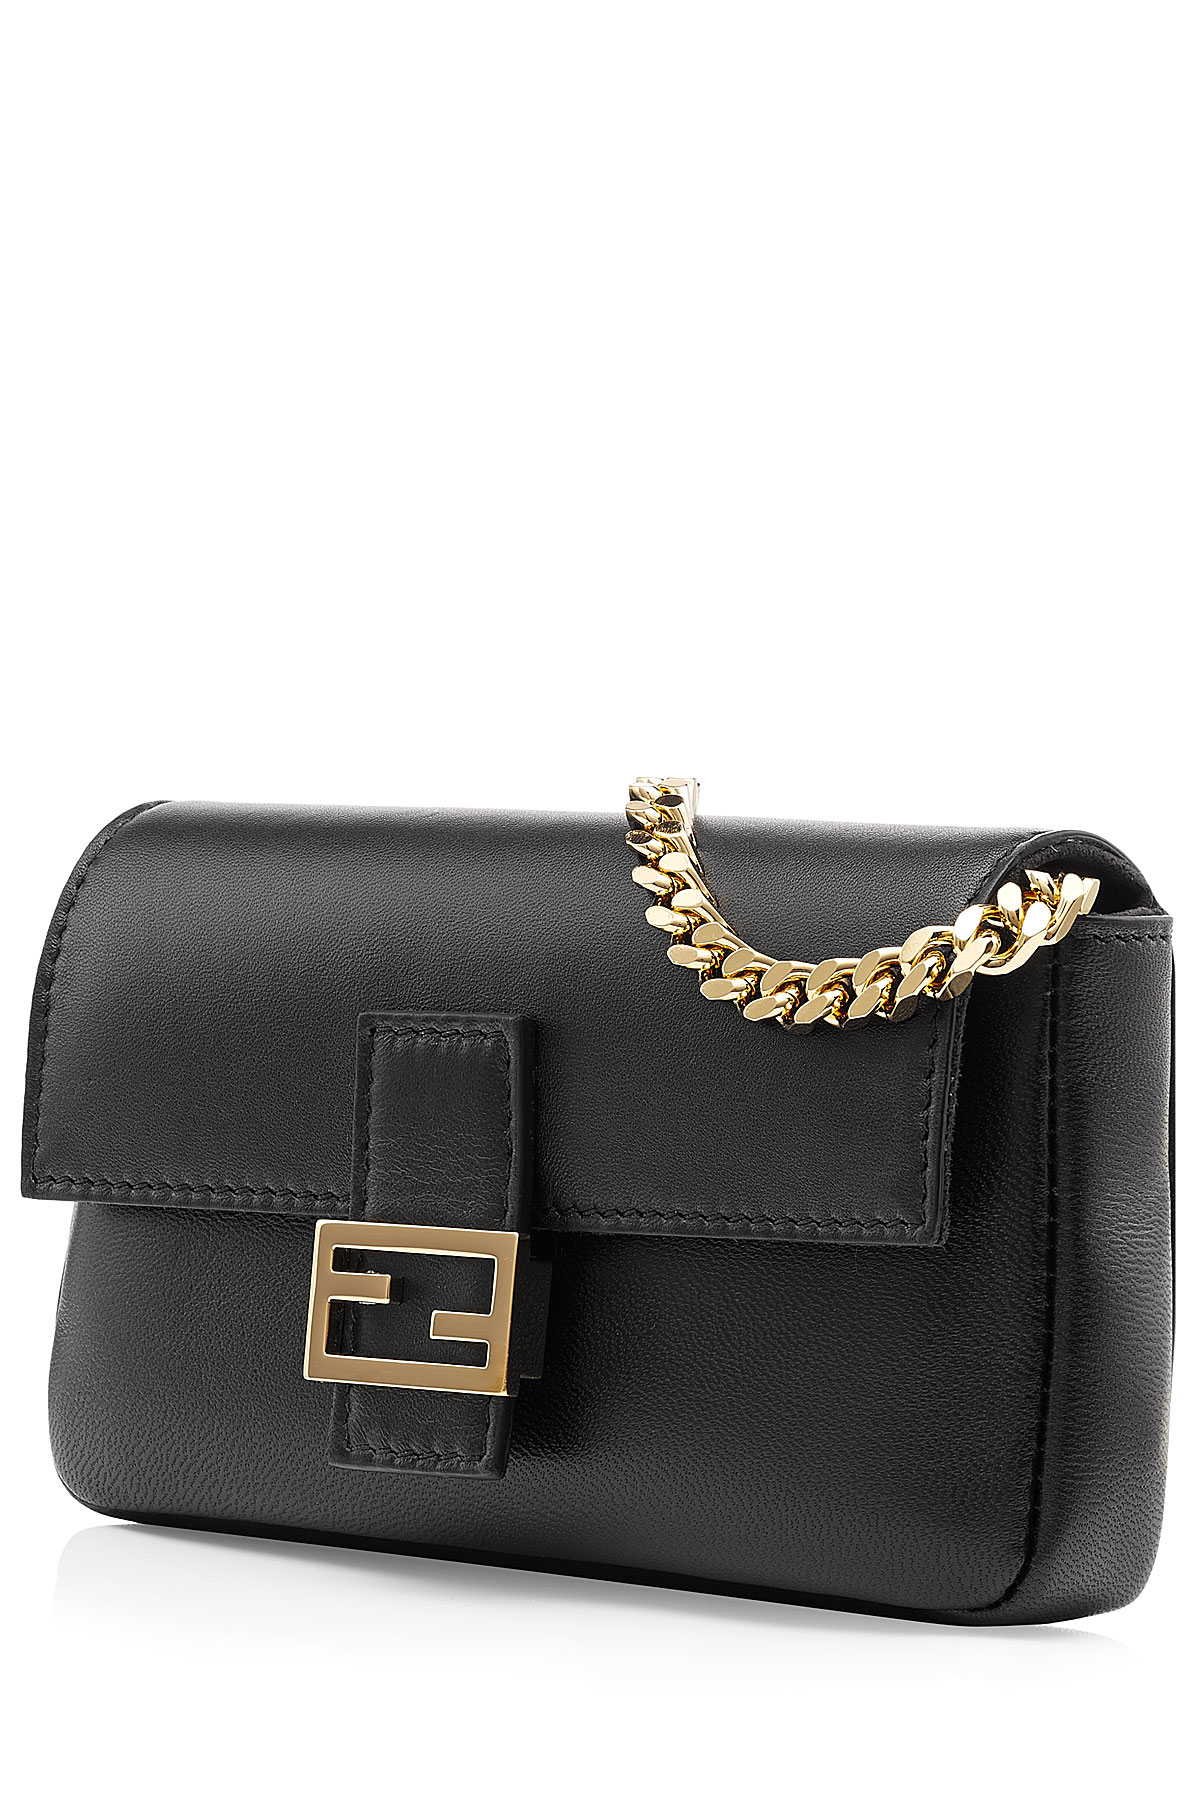 Lyst - Fendi Micro Baguette Leather Shoulder Bag - Black in Black